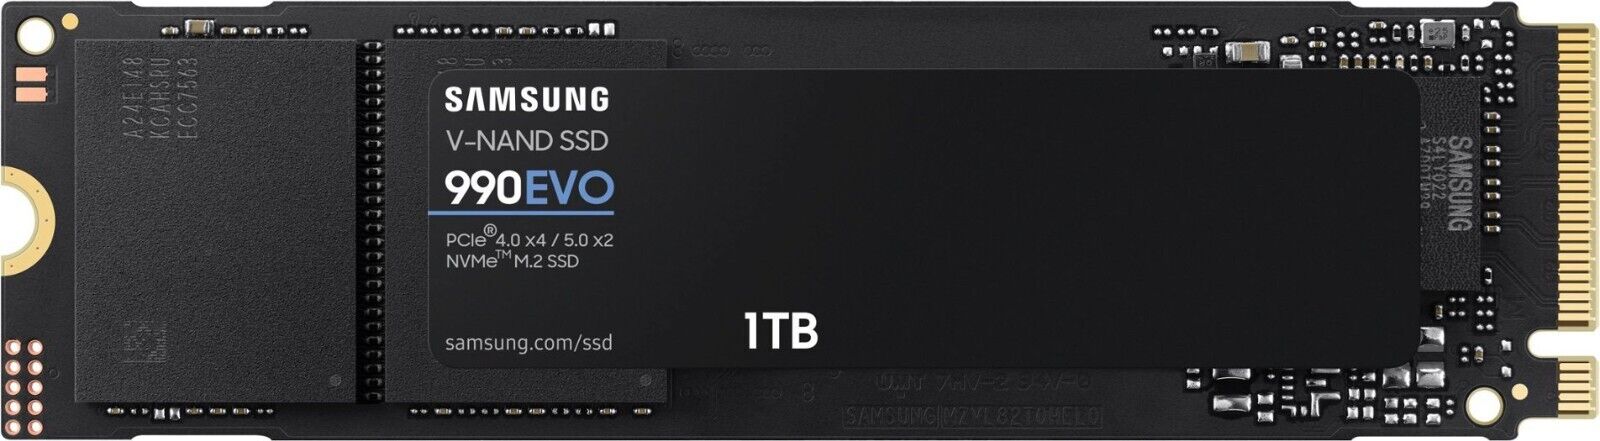 Samsung - 990 EVO SSD 1TB Internal SSD PCIe M.2 2280 (MZ-V9E1T0B/AM) - New